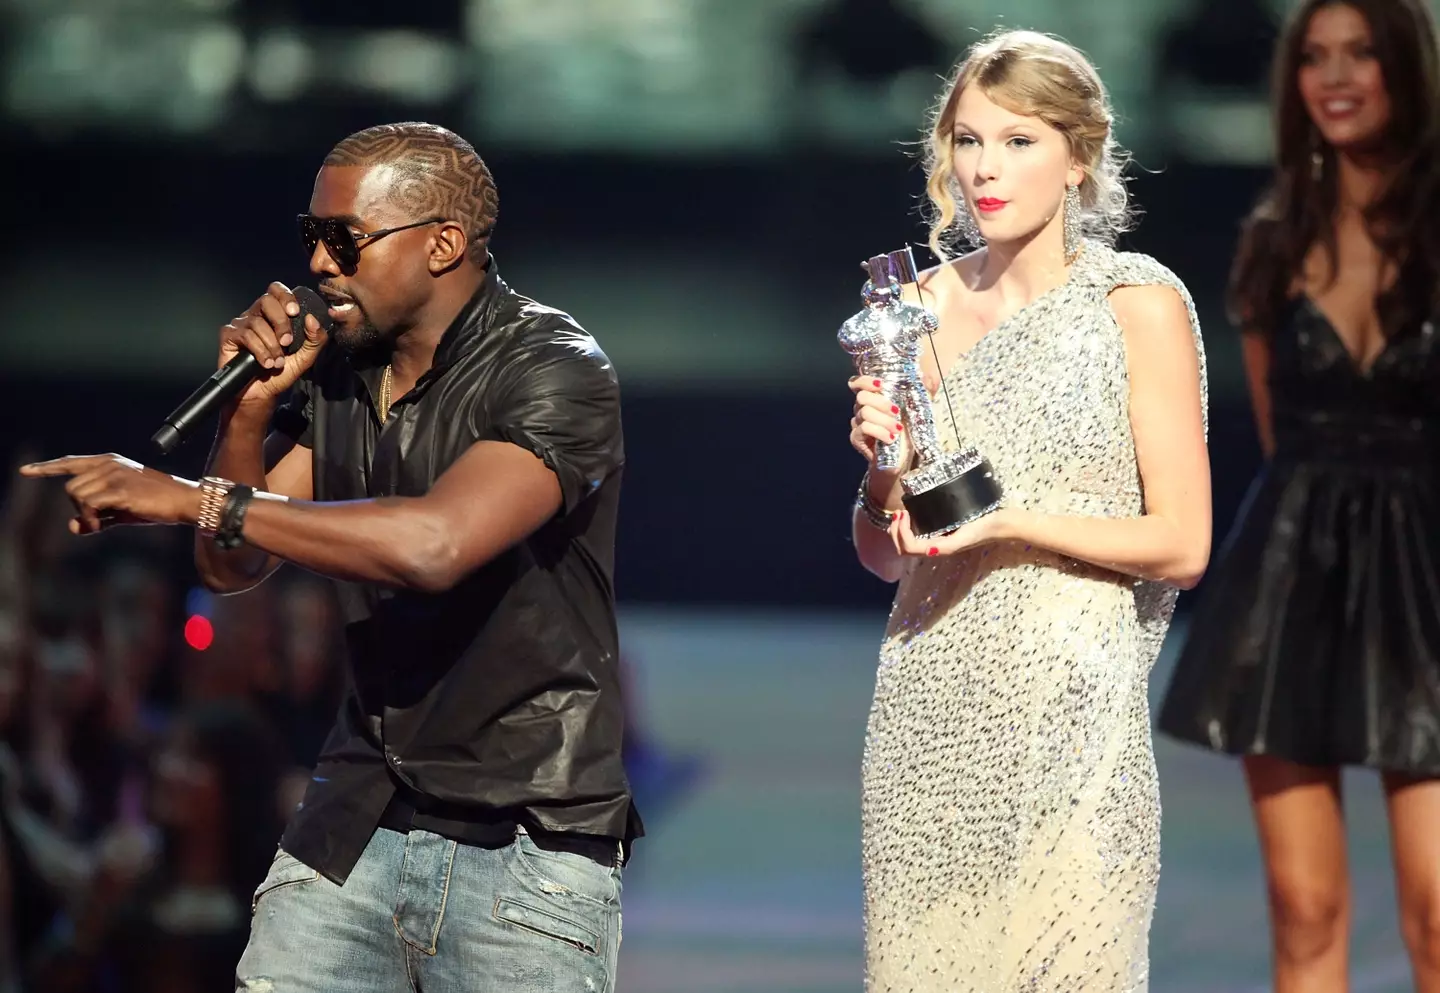 Kanye interrupted Taylor's acceptance speech back in 2009.